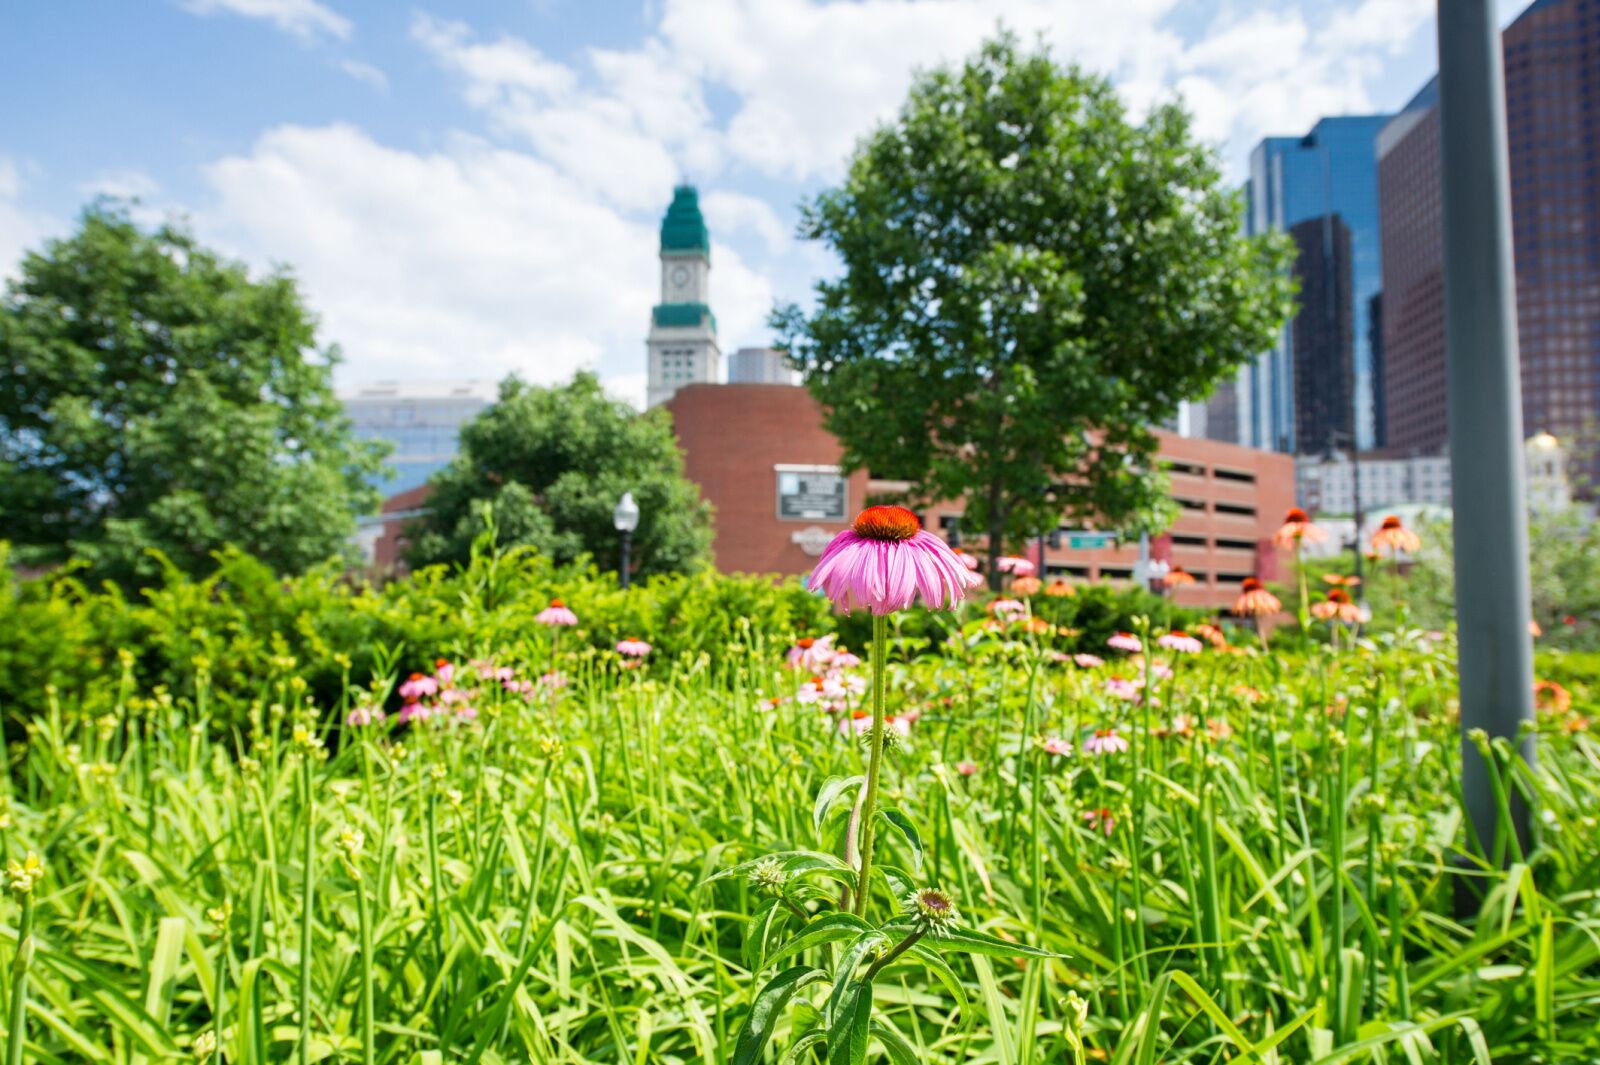 rose kennedy greenway - best parks in boston